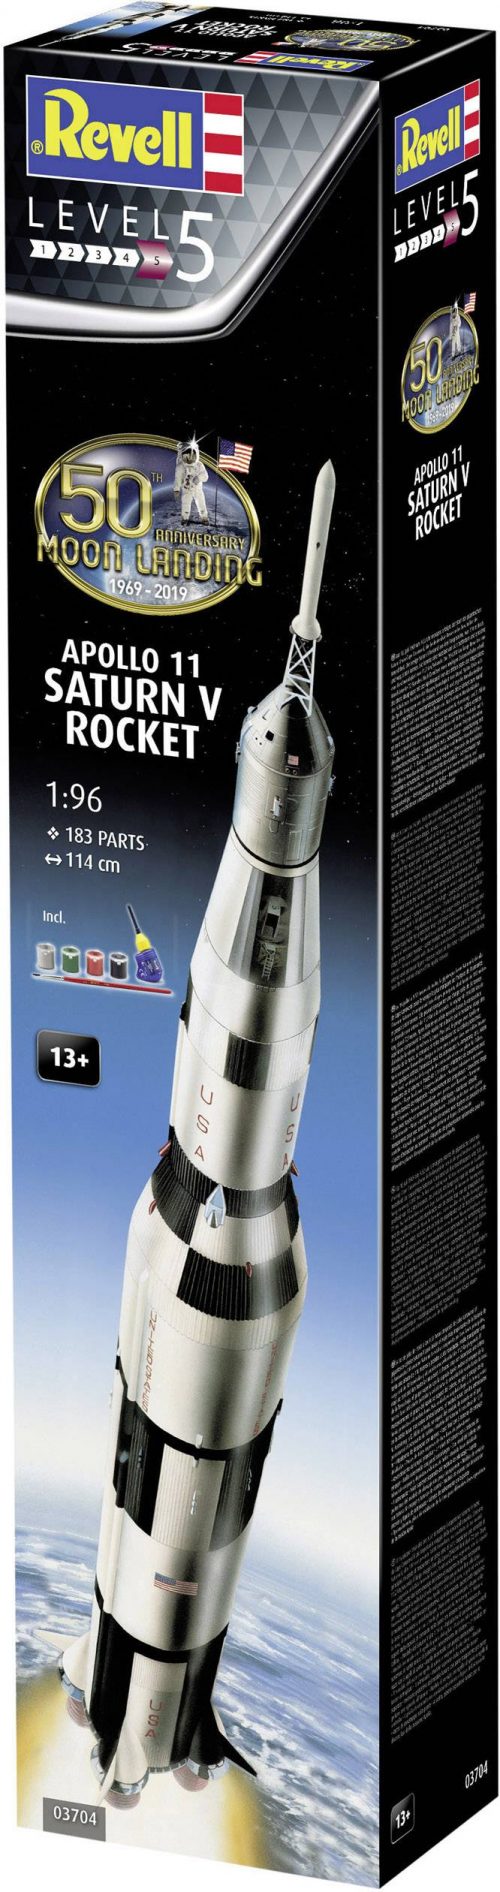 Apollo11 Saturn v Rocket